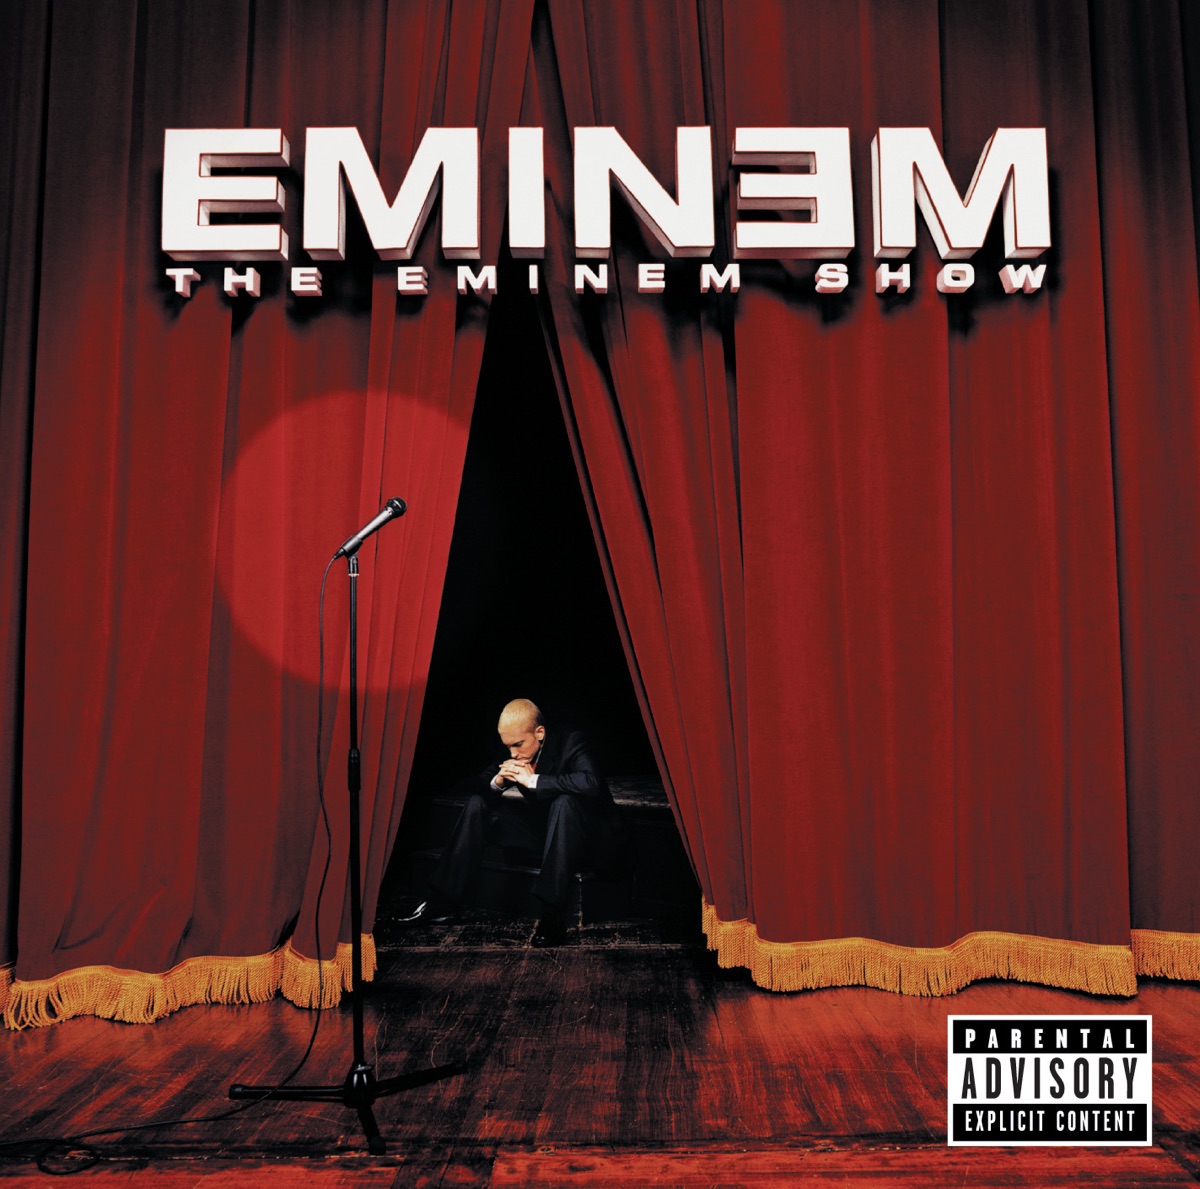 The Eminem Show (Expanded Edition) - Album by Eminem - Apple Music